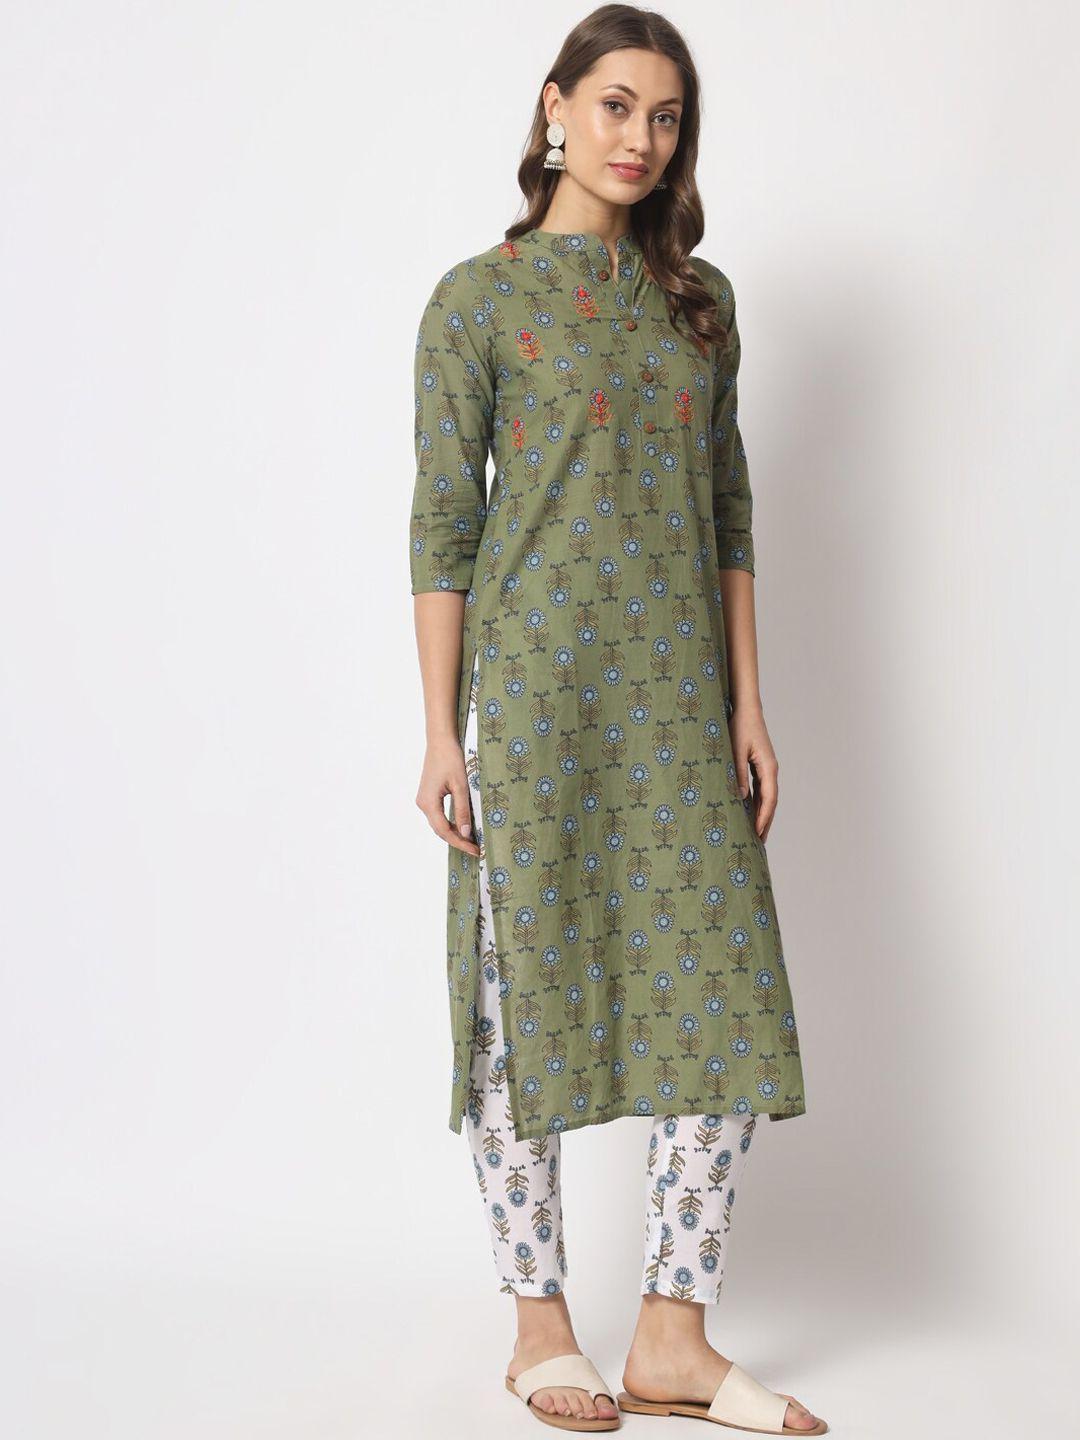 mishpra floral printed thread work pure cotton kurta with trousers & dupatta